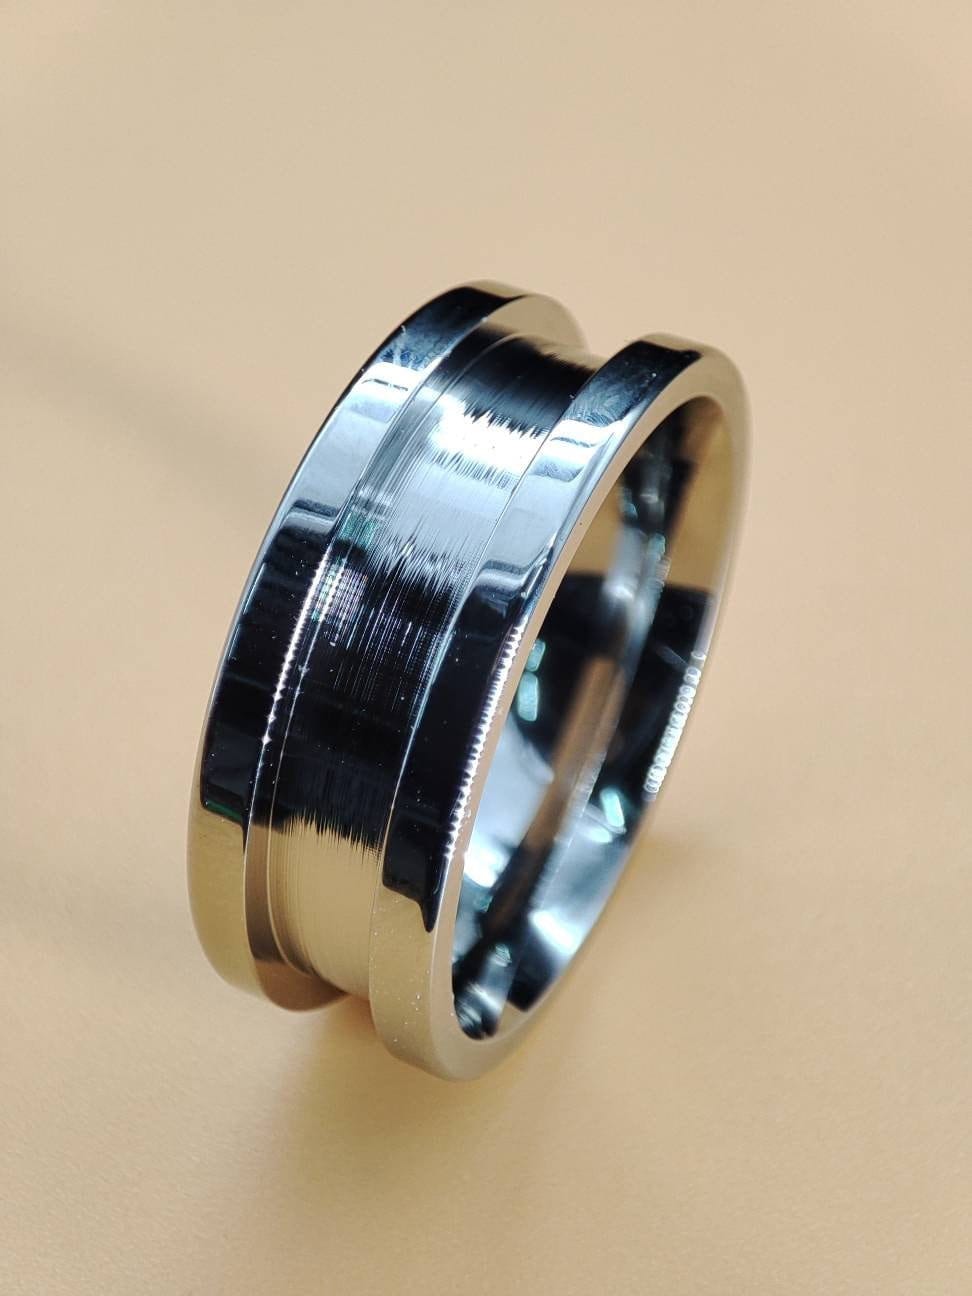 Stainless Steel Ring Blank 